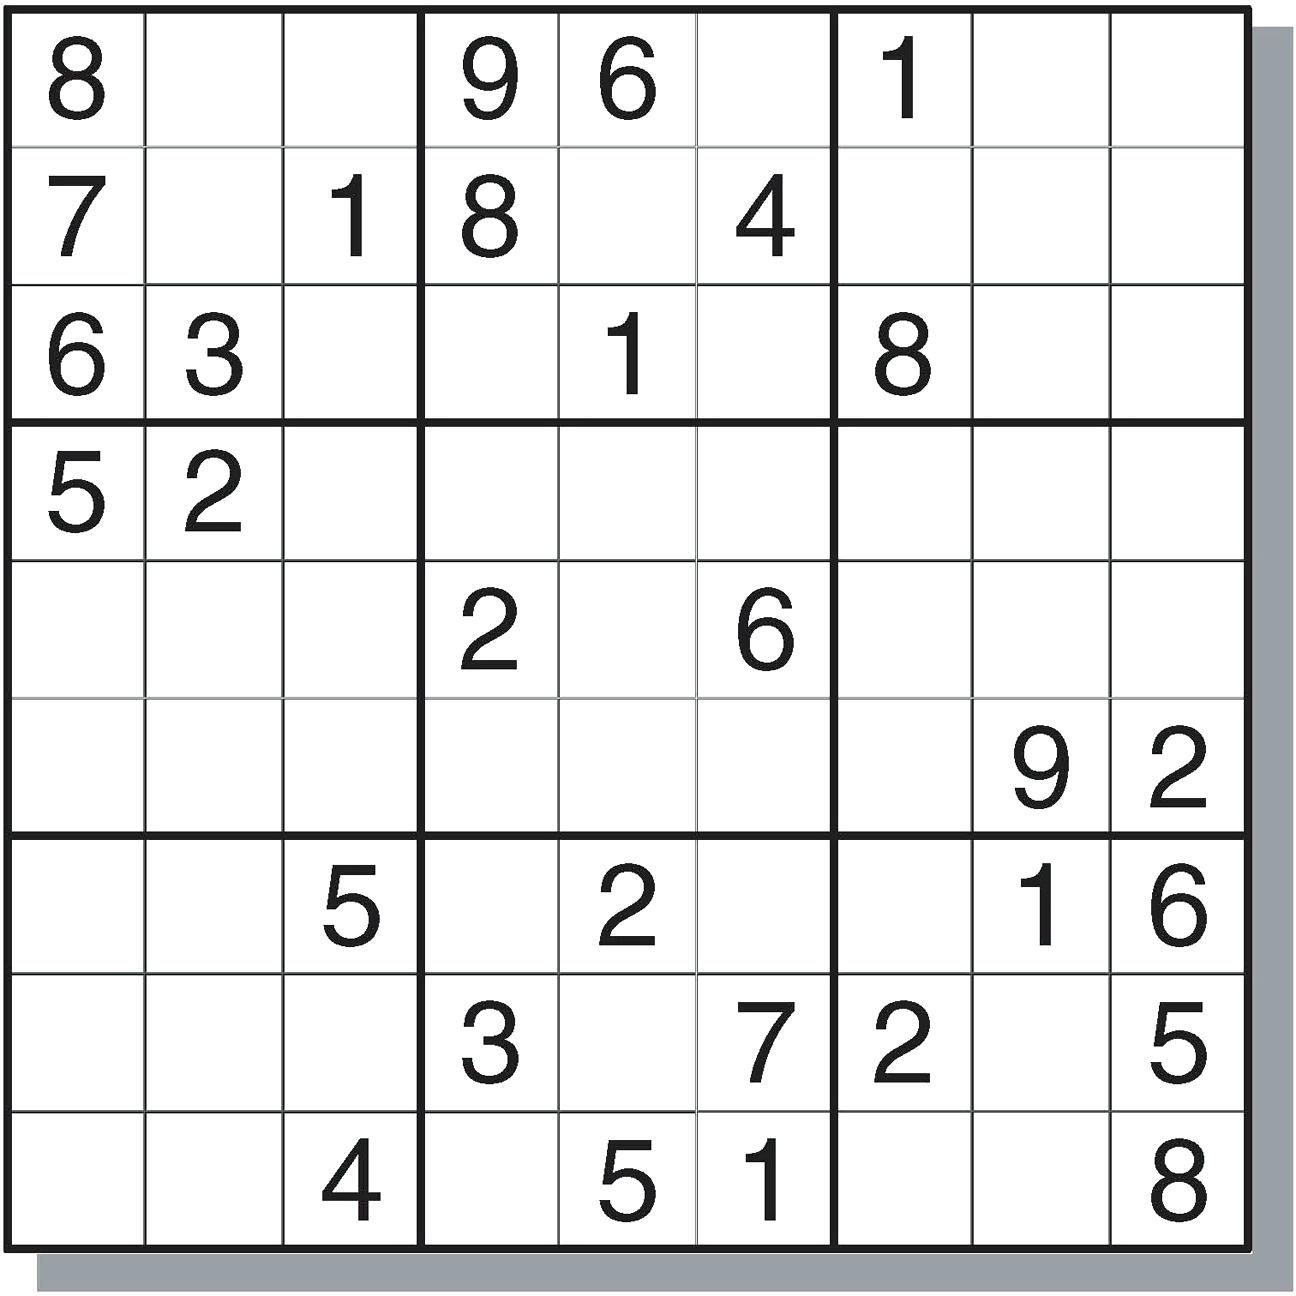 Worksheet : Easy Sudoku Puzzles Printable Flvipymy Screenshoot On - Printable Sudoku Puzzles Online